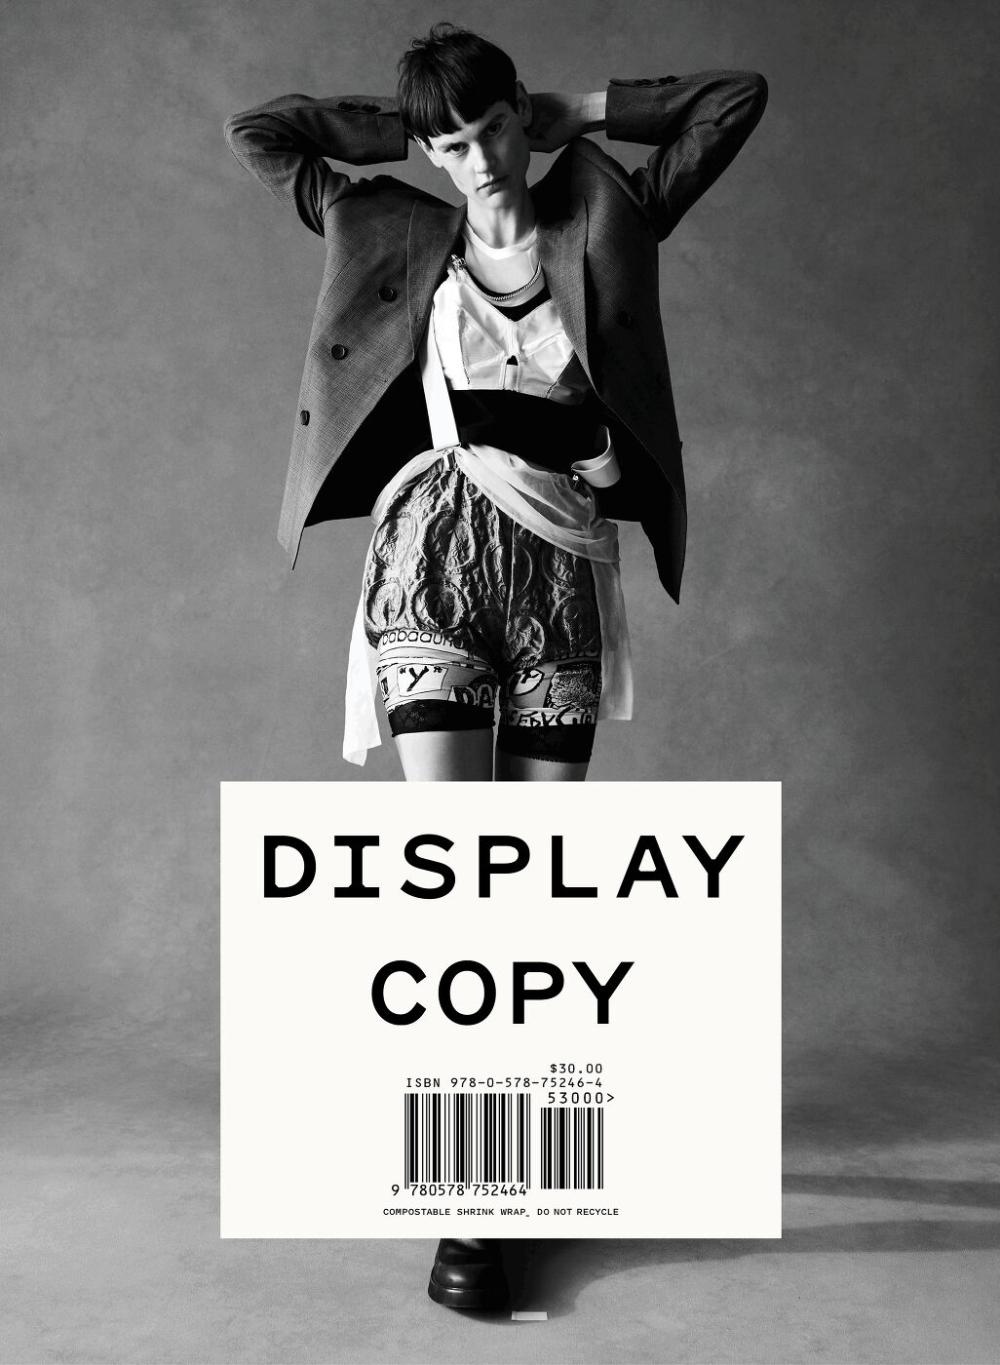 Saskia de Brauw Covers Display Copy Issue One